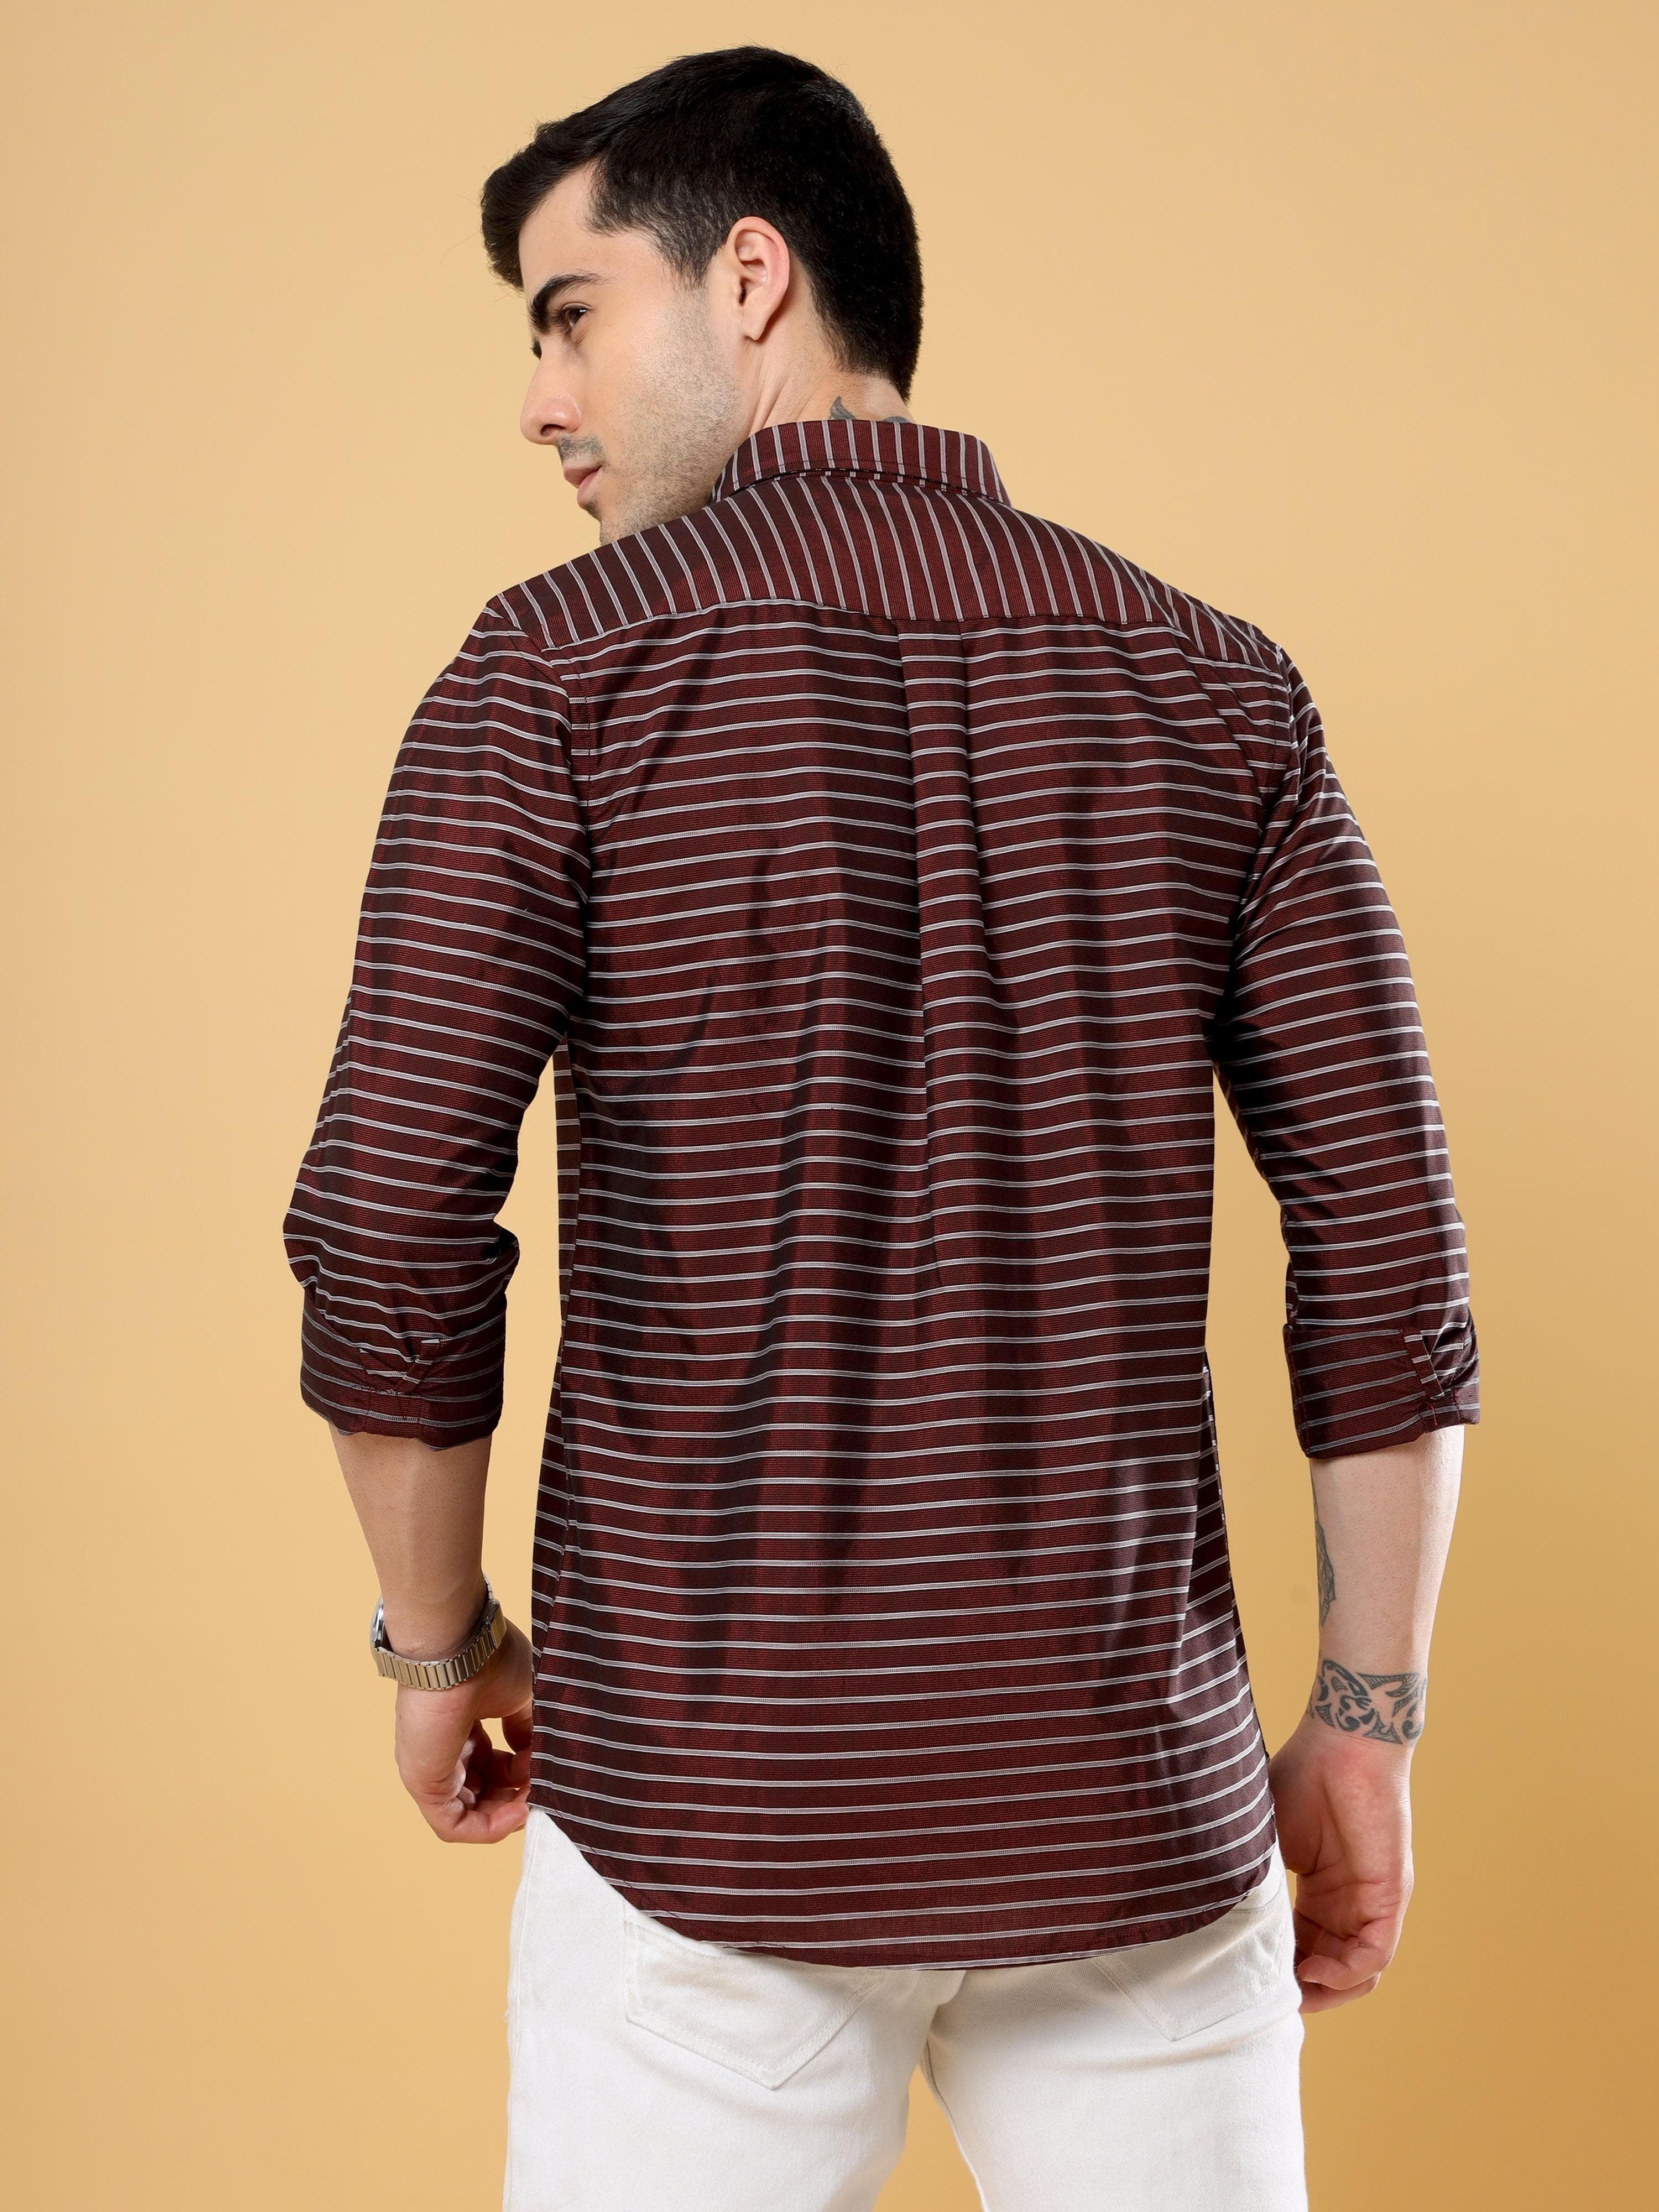 Shop Trendy Elegant Best Striped Shirt Online At Great PriceRs. 899.00